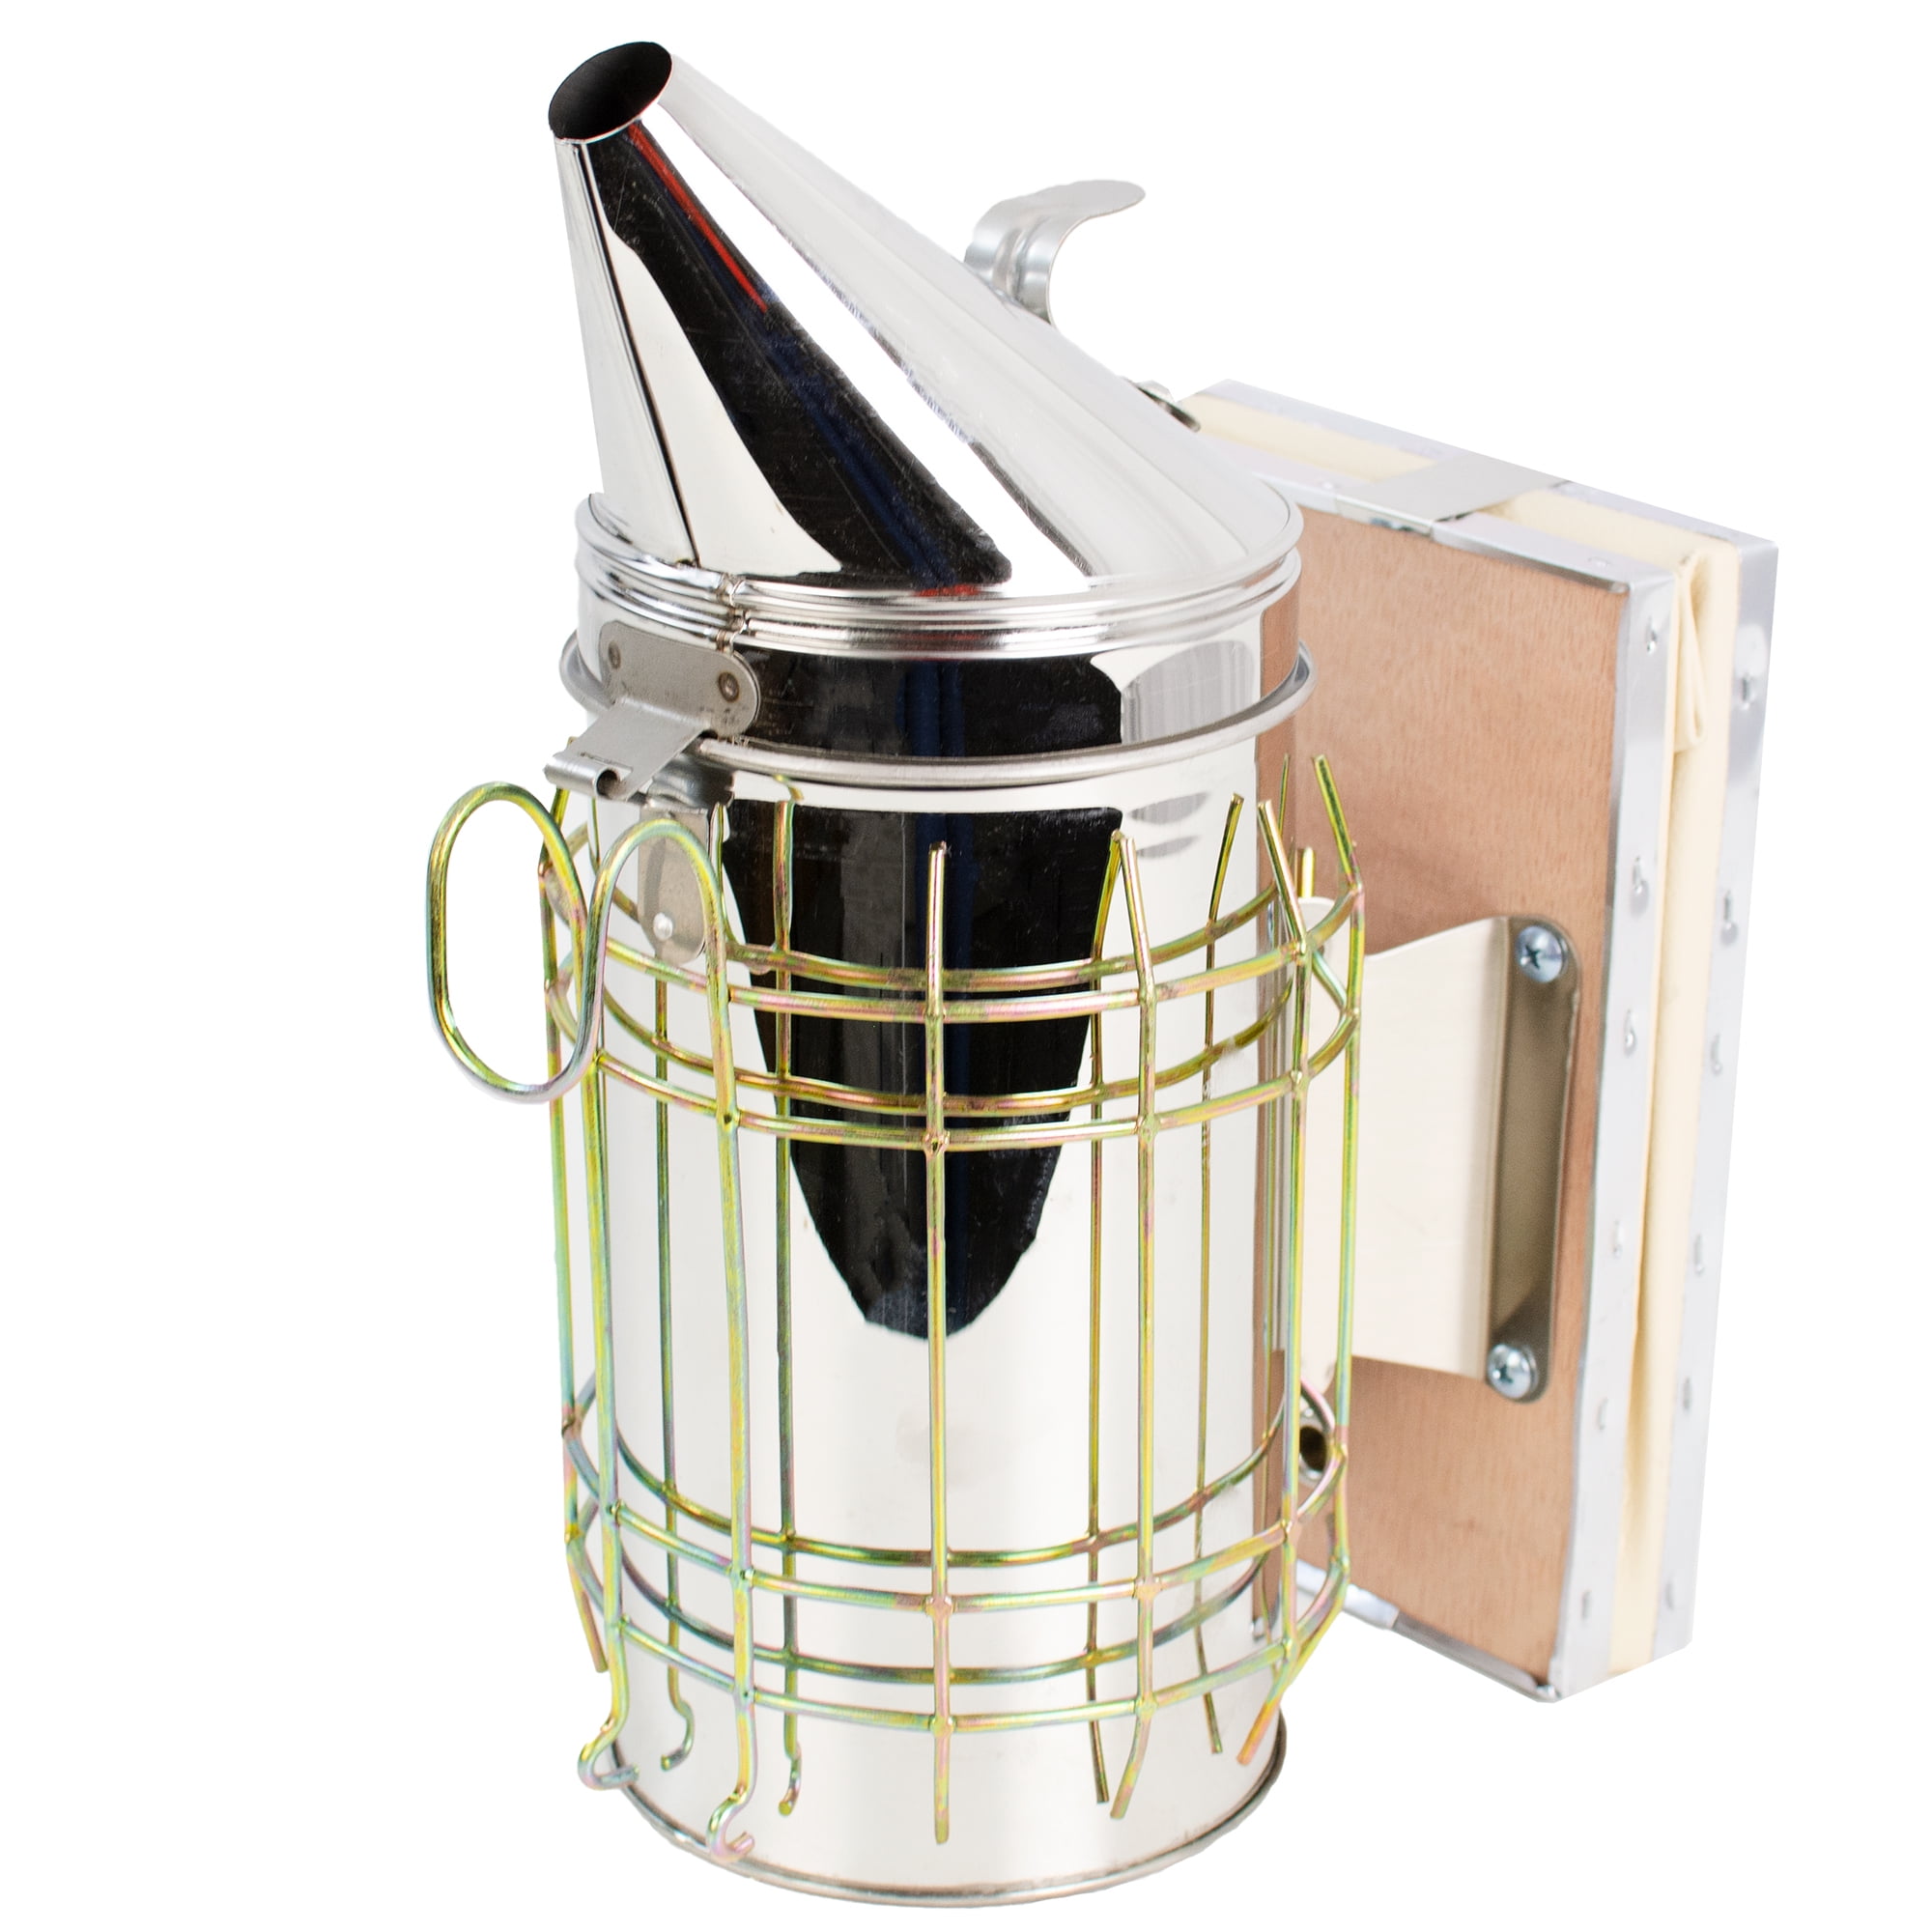 15X Bee Hive Smoker Stainless Steel W/ Heat Shield Calming Beekeeping Equipment 